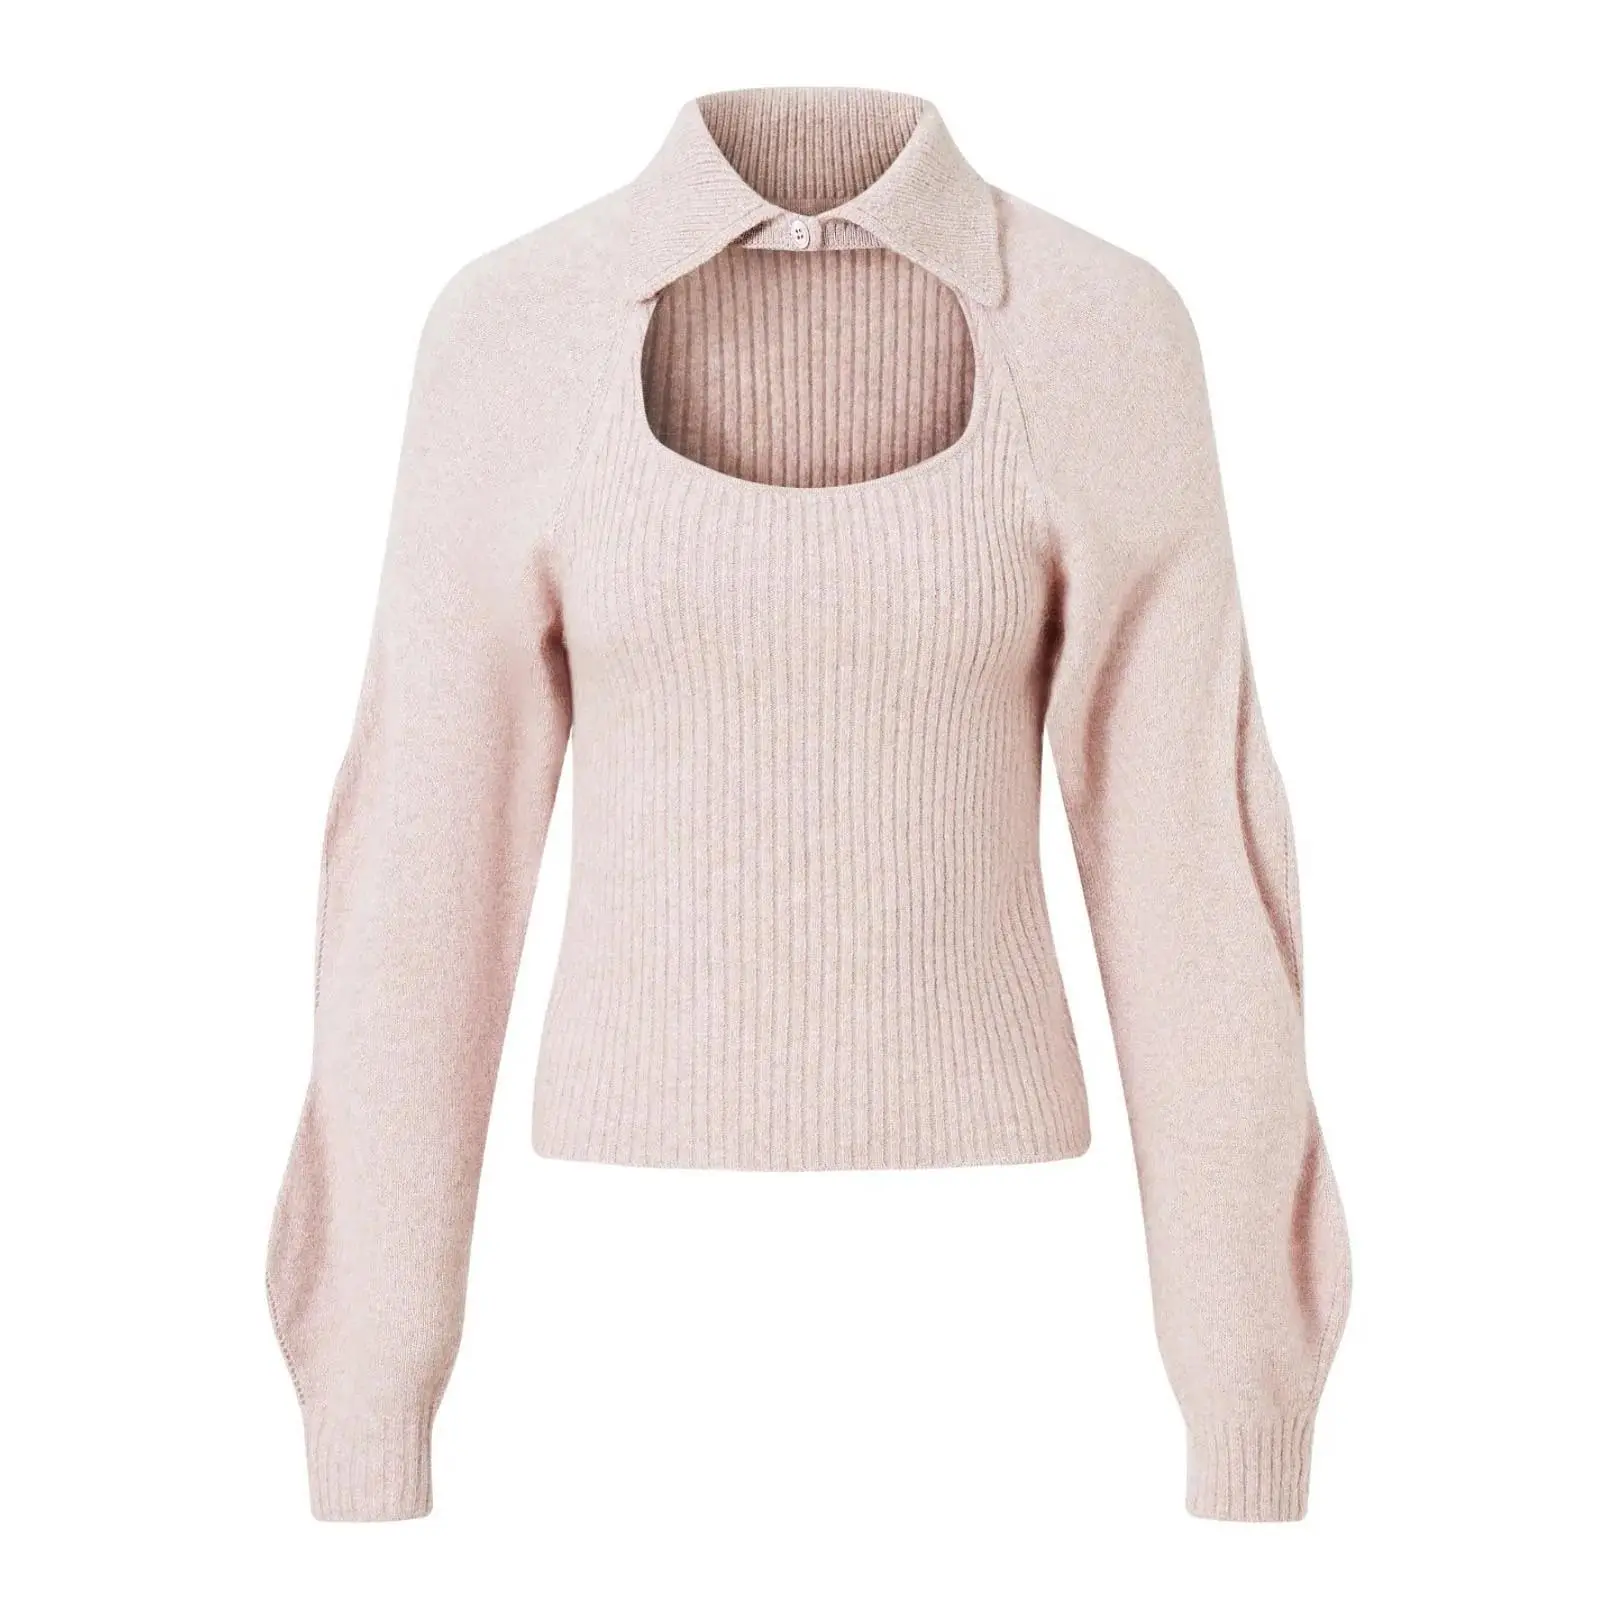 FYB New Autumn Fashion Lady's Elegant Chain Vest Zip Cardigan Jacket Knitted Pants 2 Piece Set Women Knit Track Suit Sweater Set